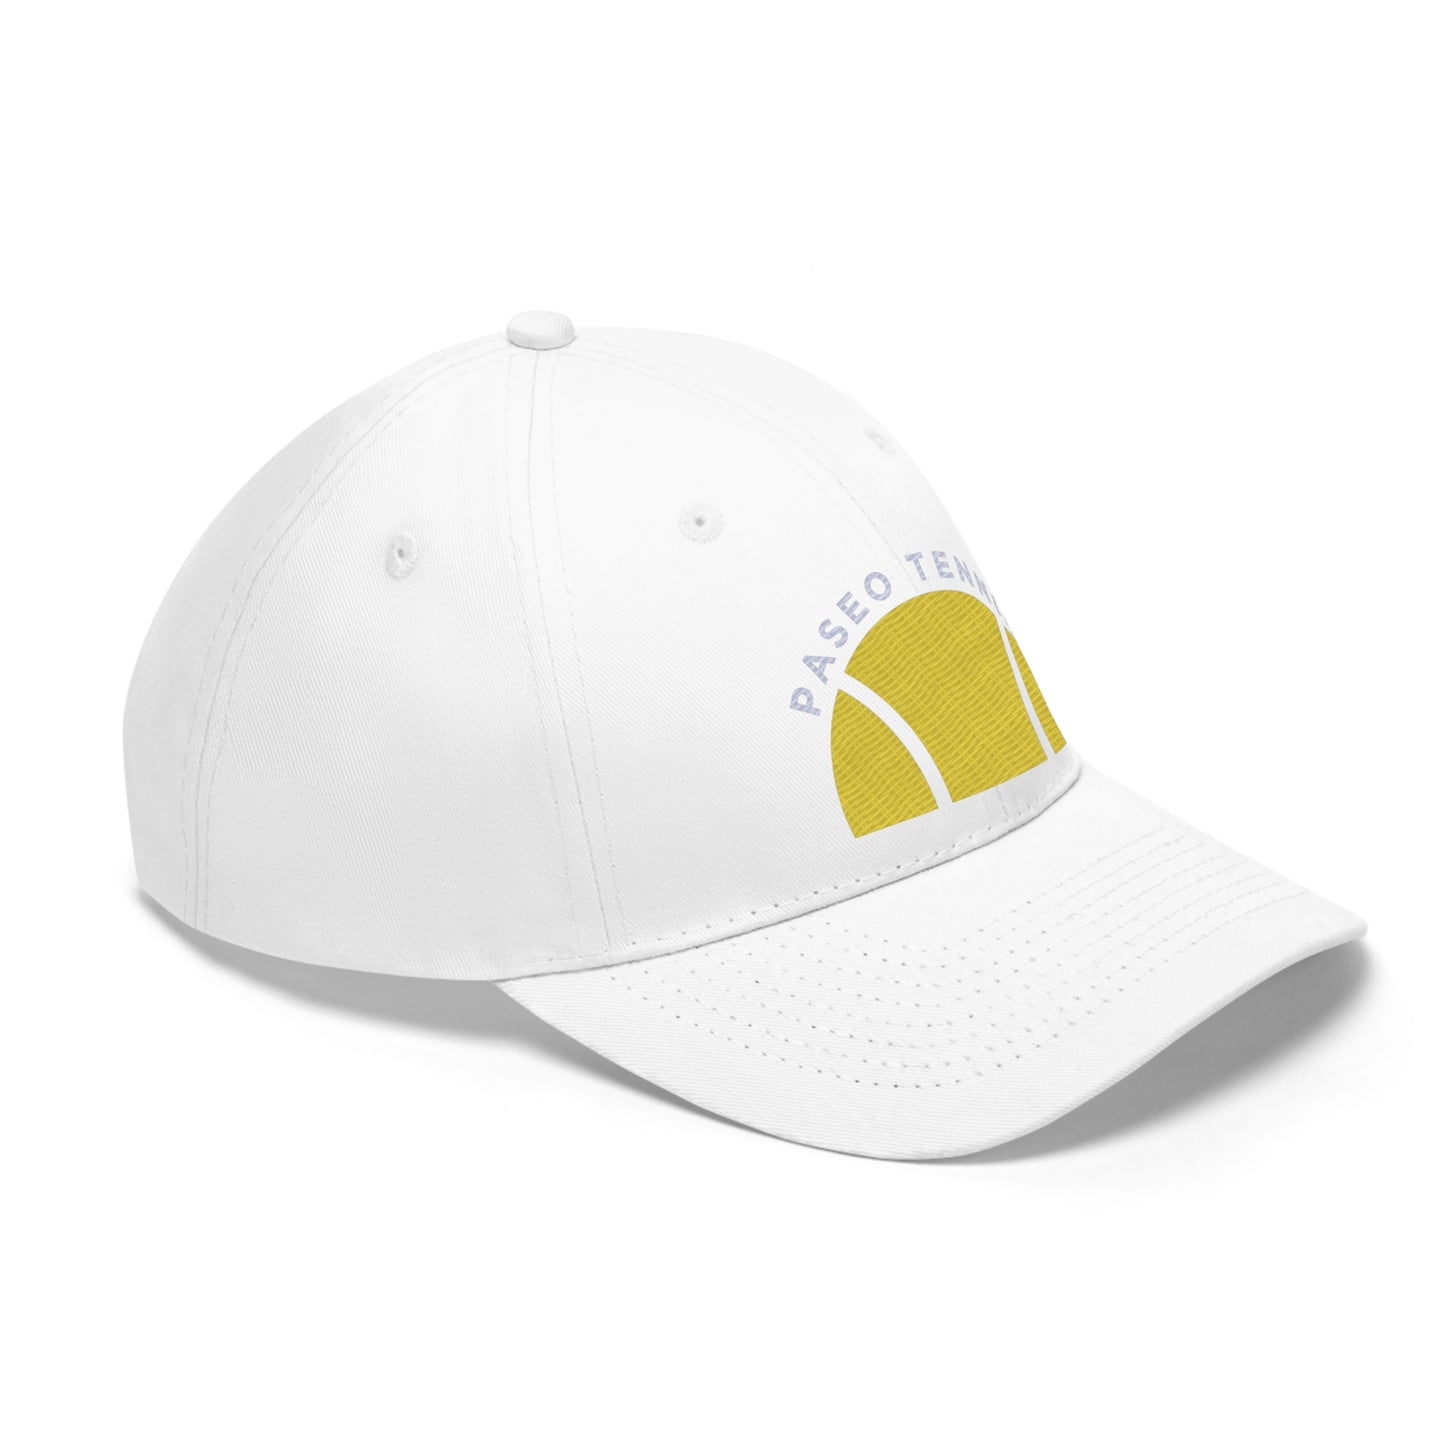 Custom club name Tennis ball hat